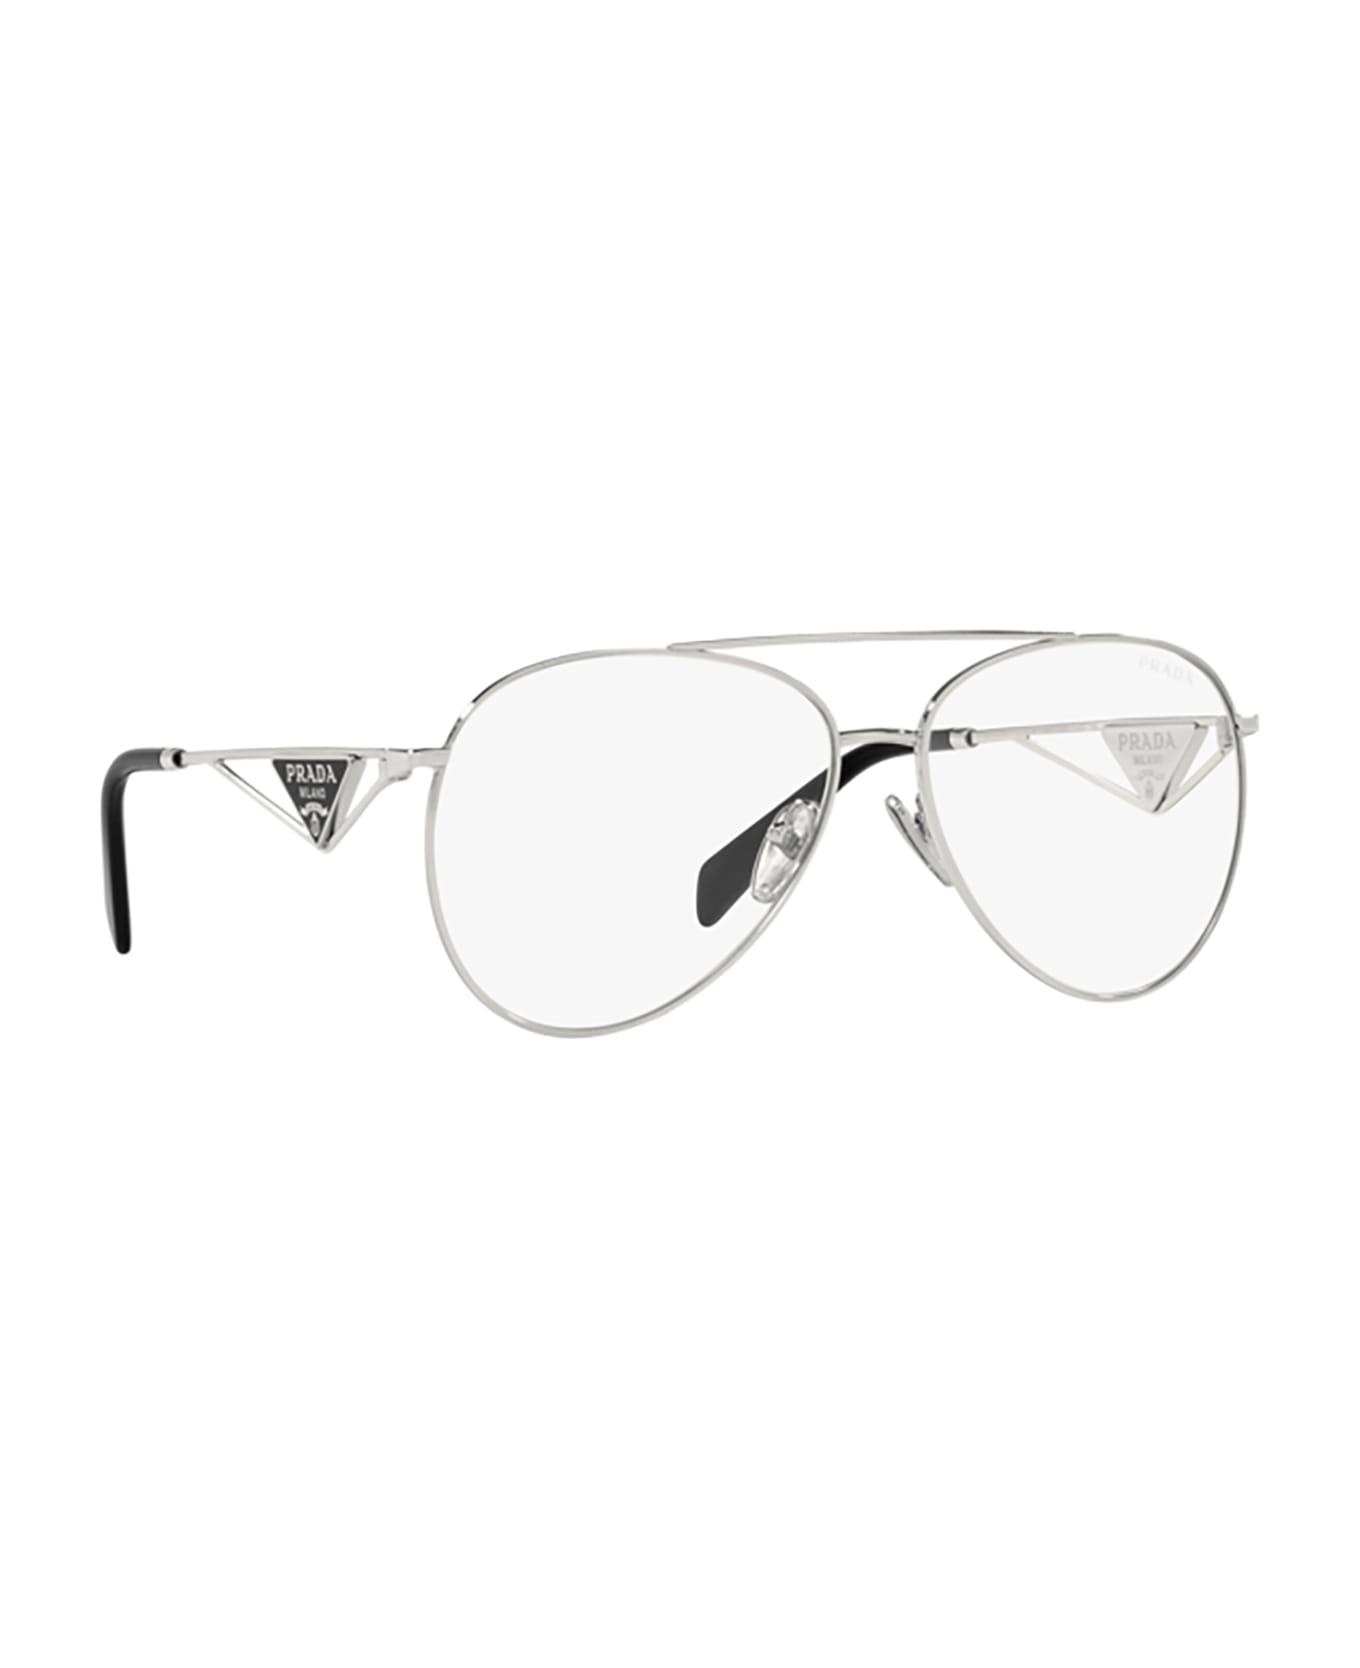 Prada Eyewear Pr 73zs Silver Sunglasses - Silver